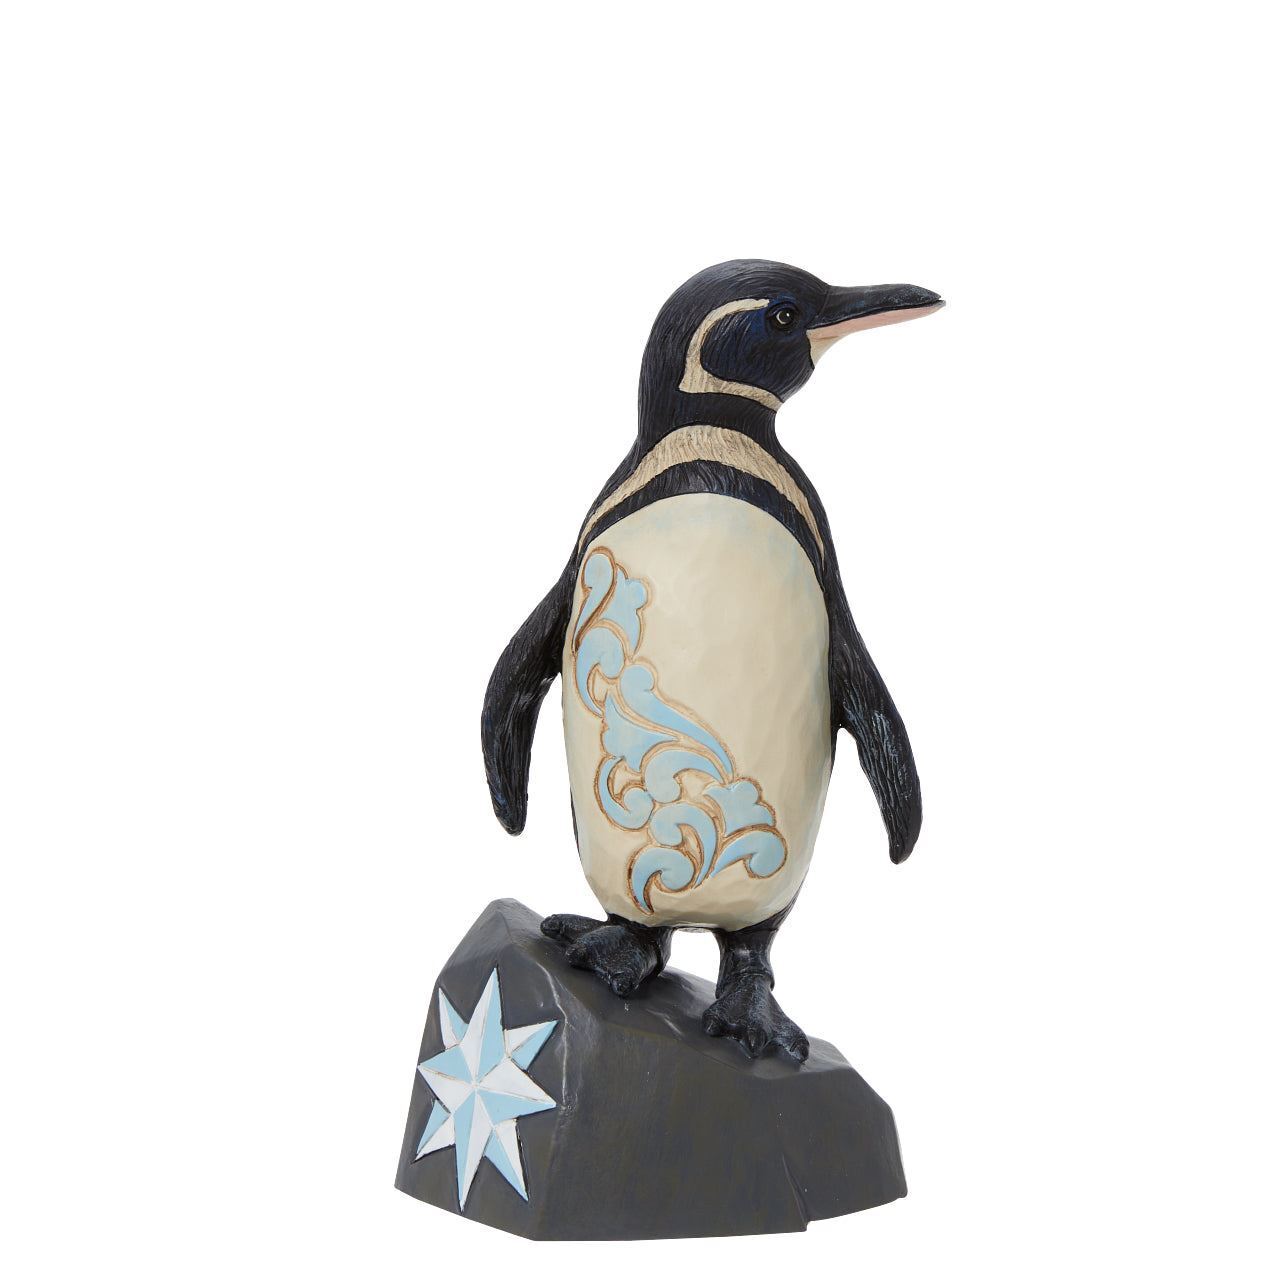 Jim Shore Animal Planet Galapagos Penguin Figurine 6010944